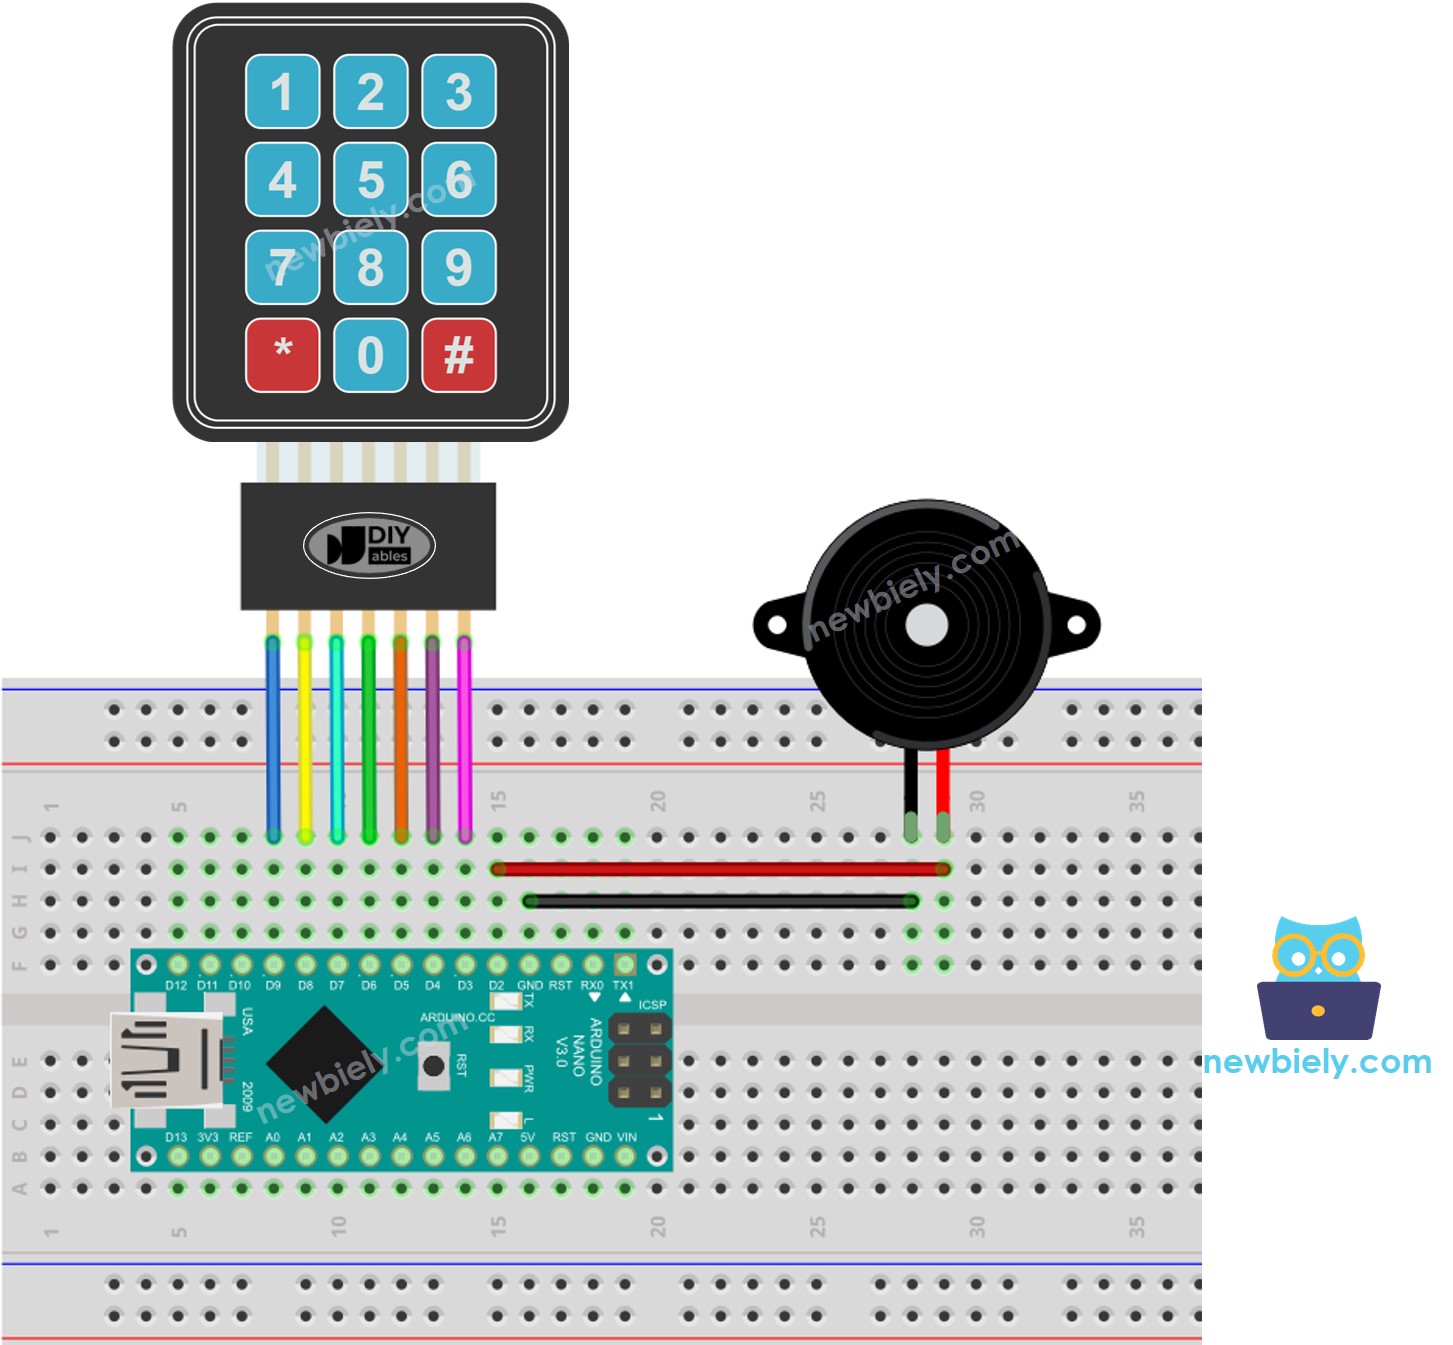 The wiring diagram between Arduino Nano and keypad piezo buzzer